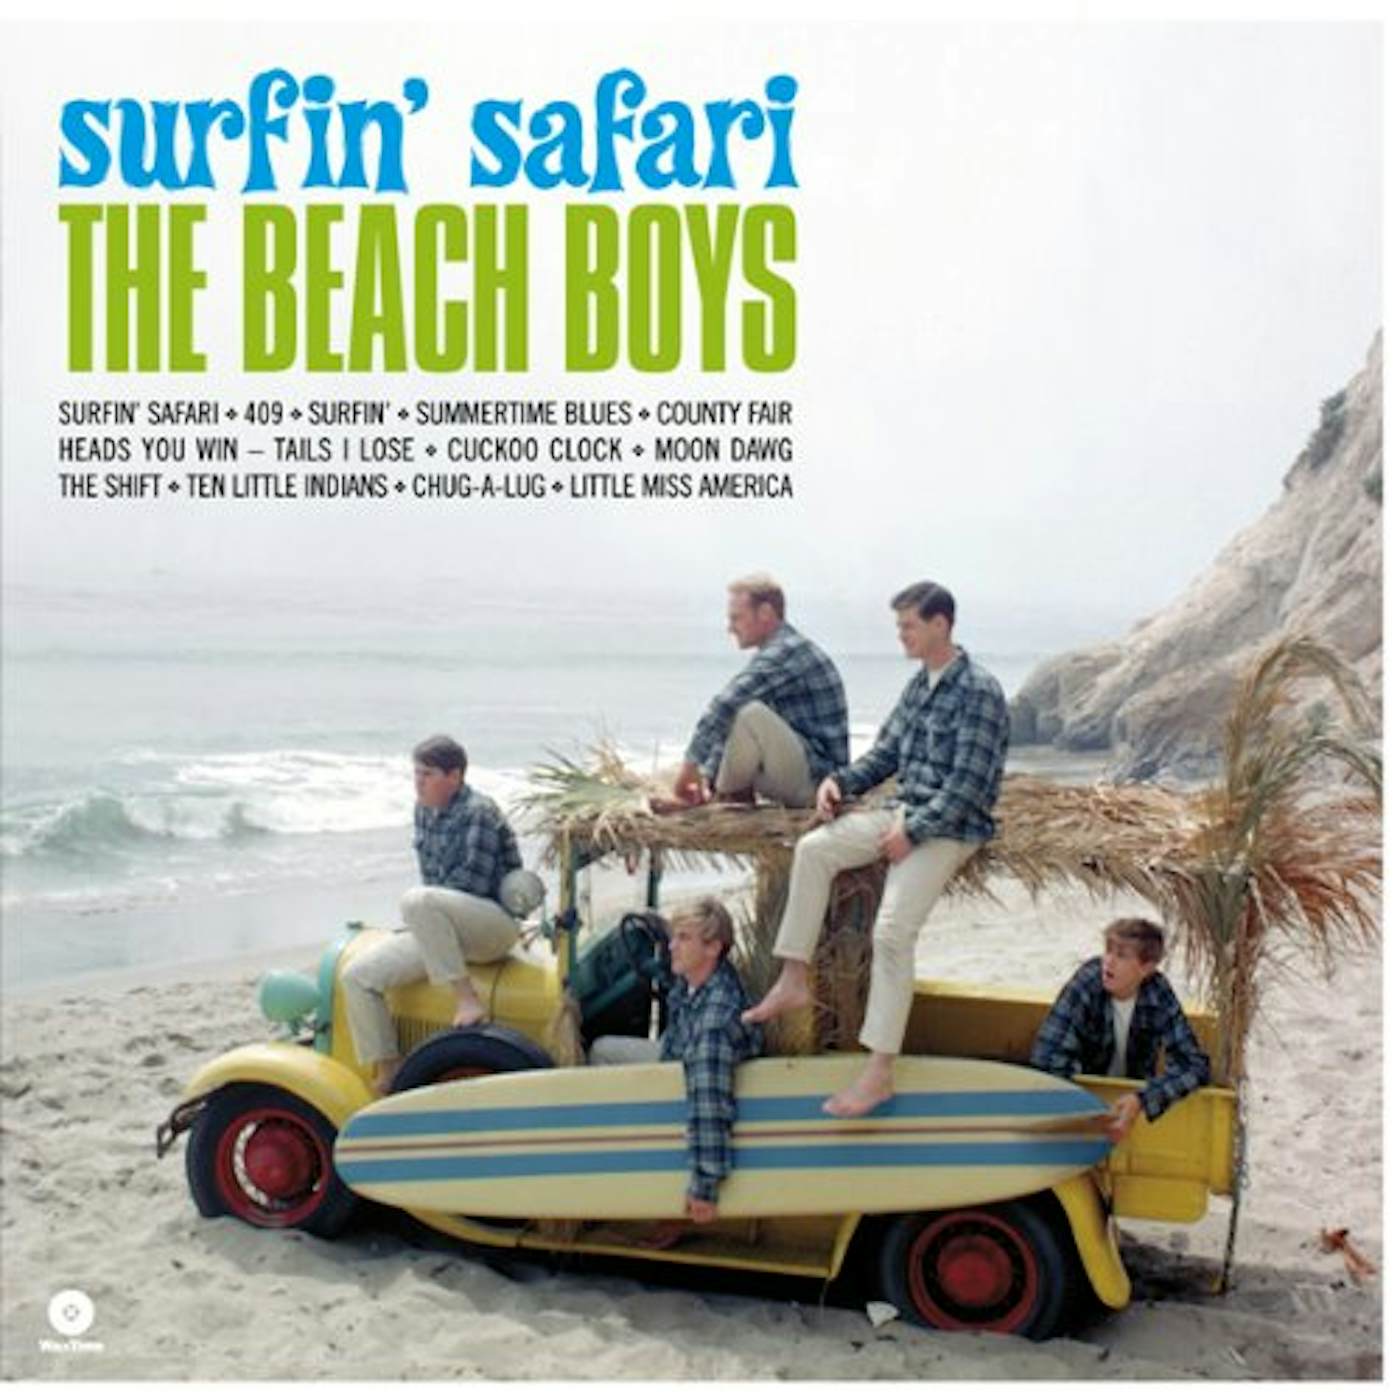 The Beach Boys SURFIN' SAFARI Vinyl Record - Spain Release